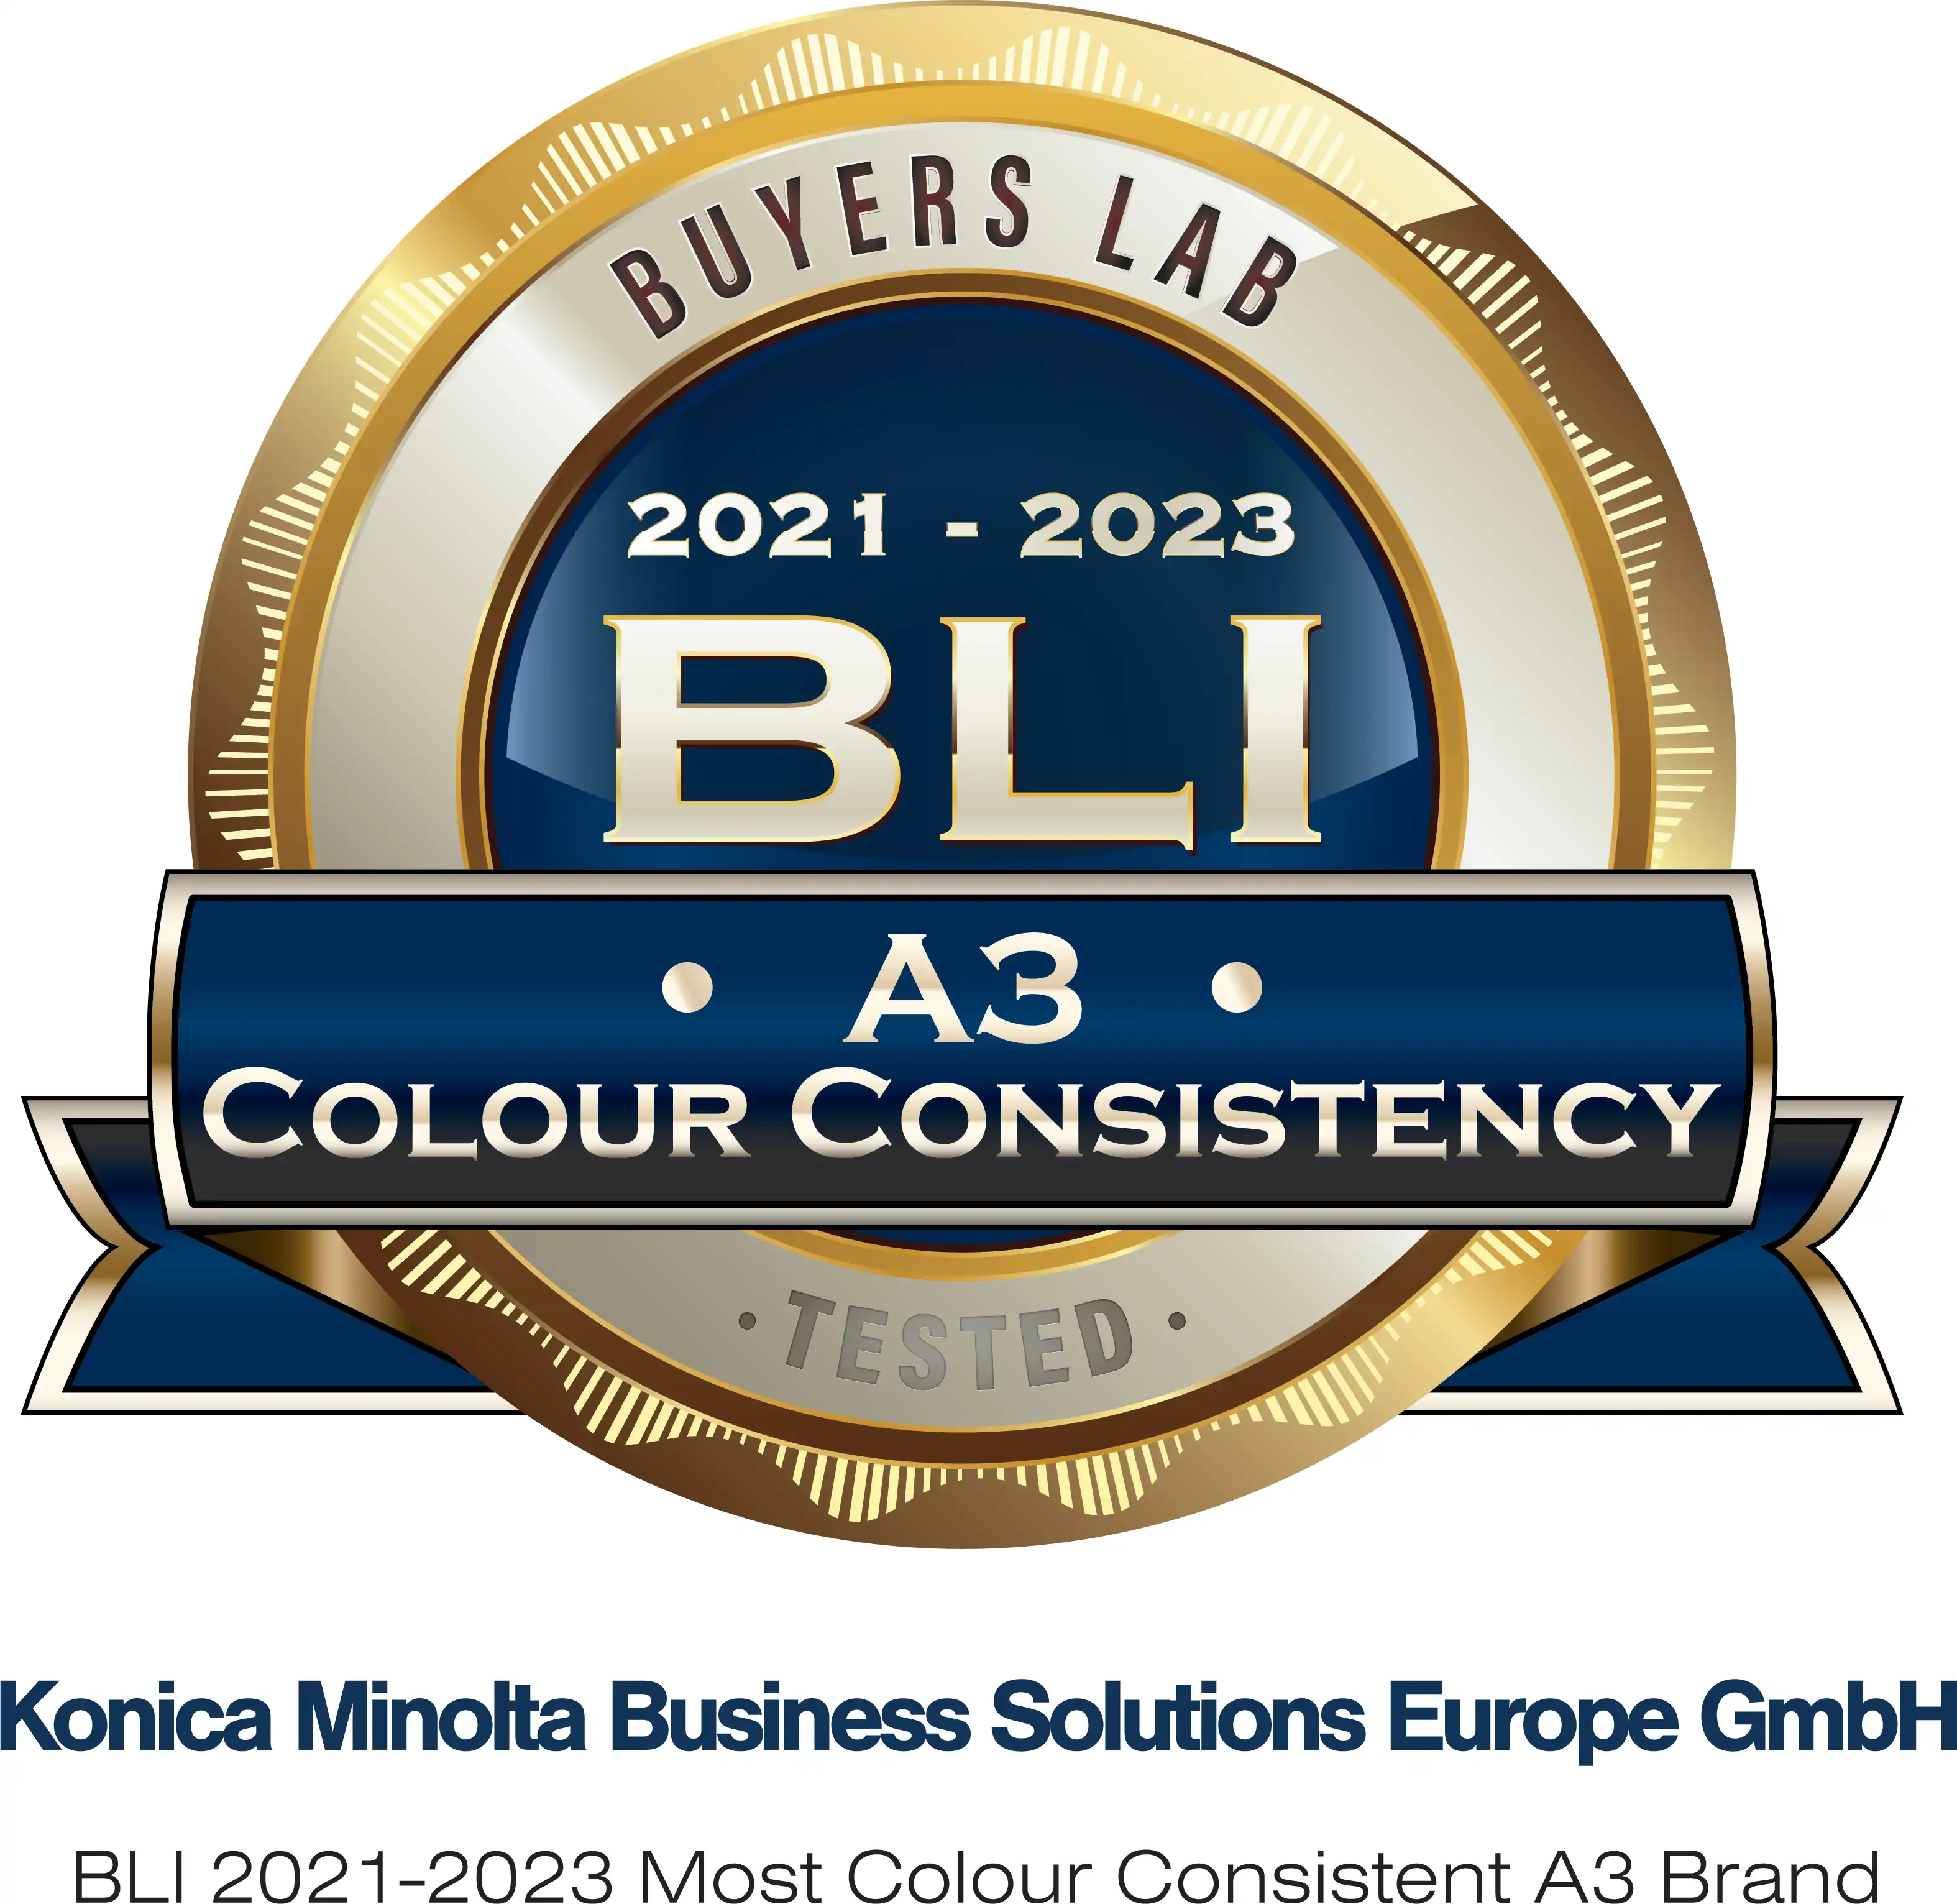  DU BLI 2021-2023 Most Colour Consistent A3 Brand Award